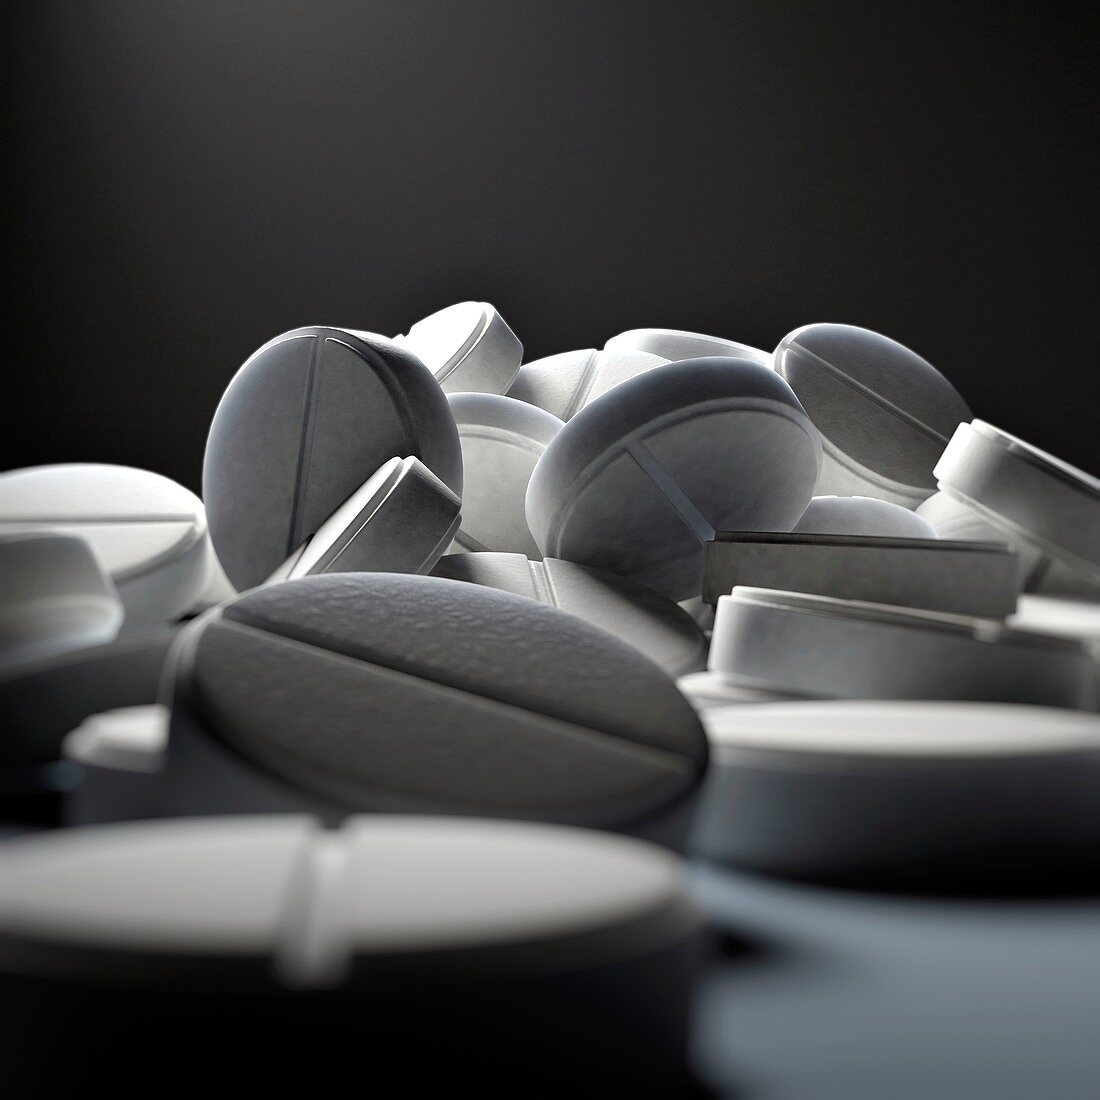 Aspirin Tablets, artwork